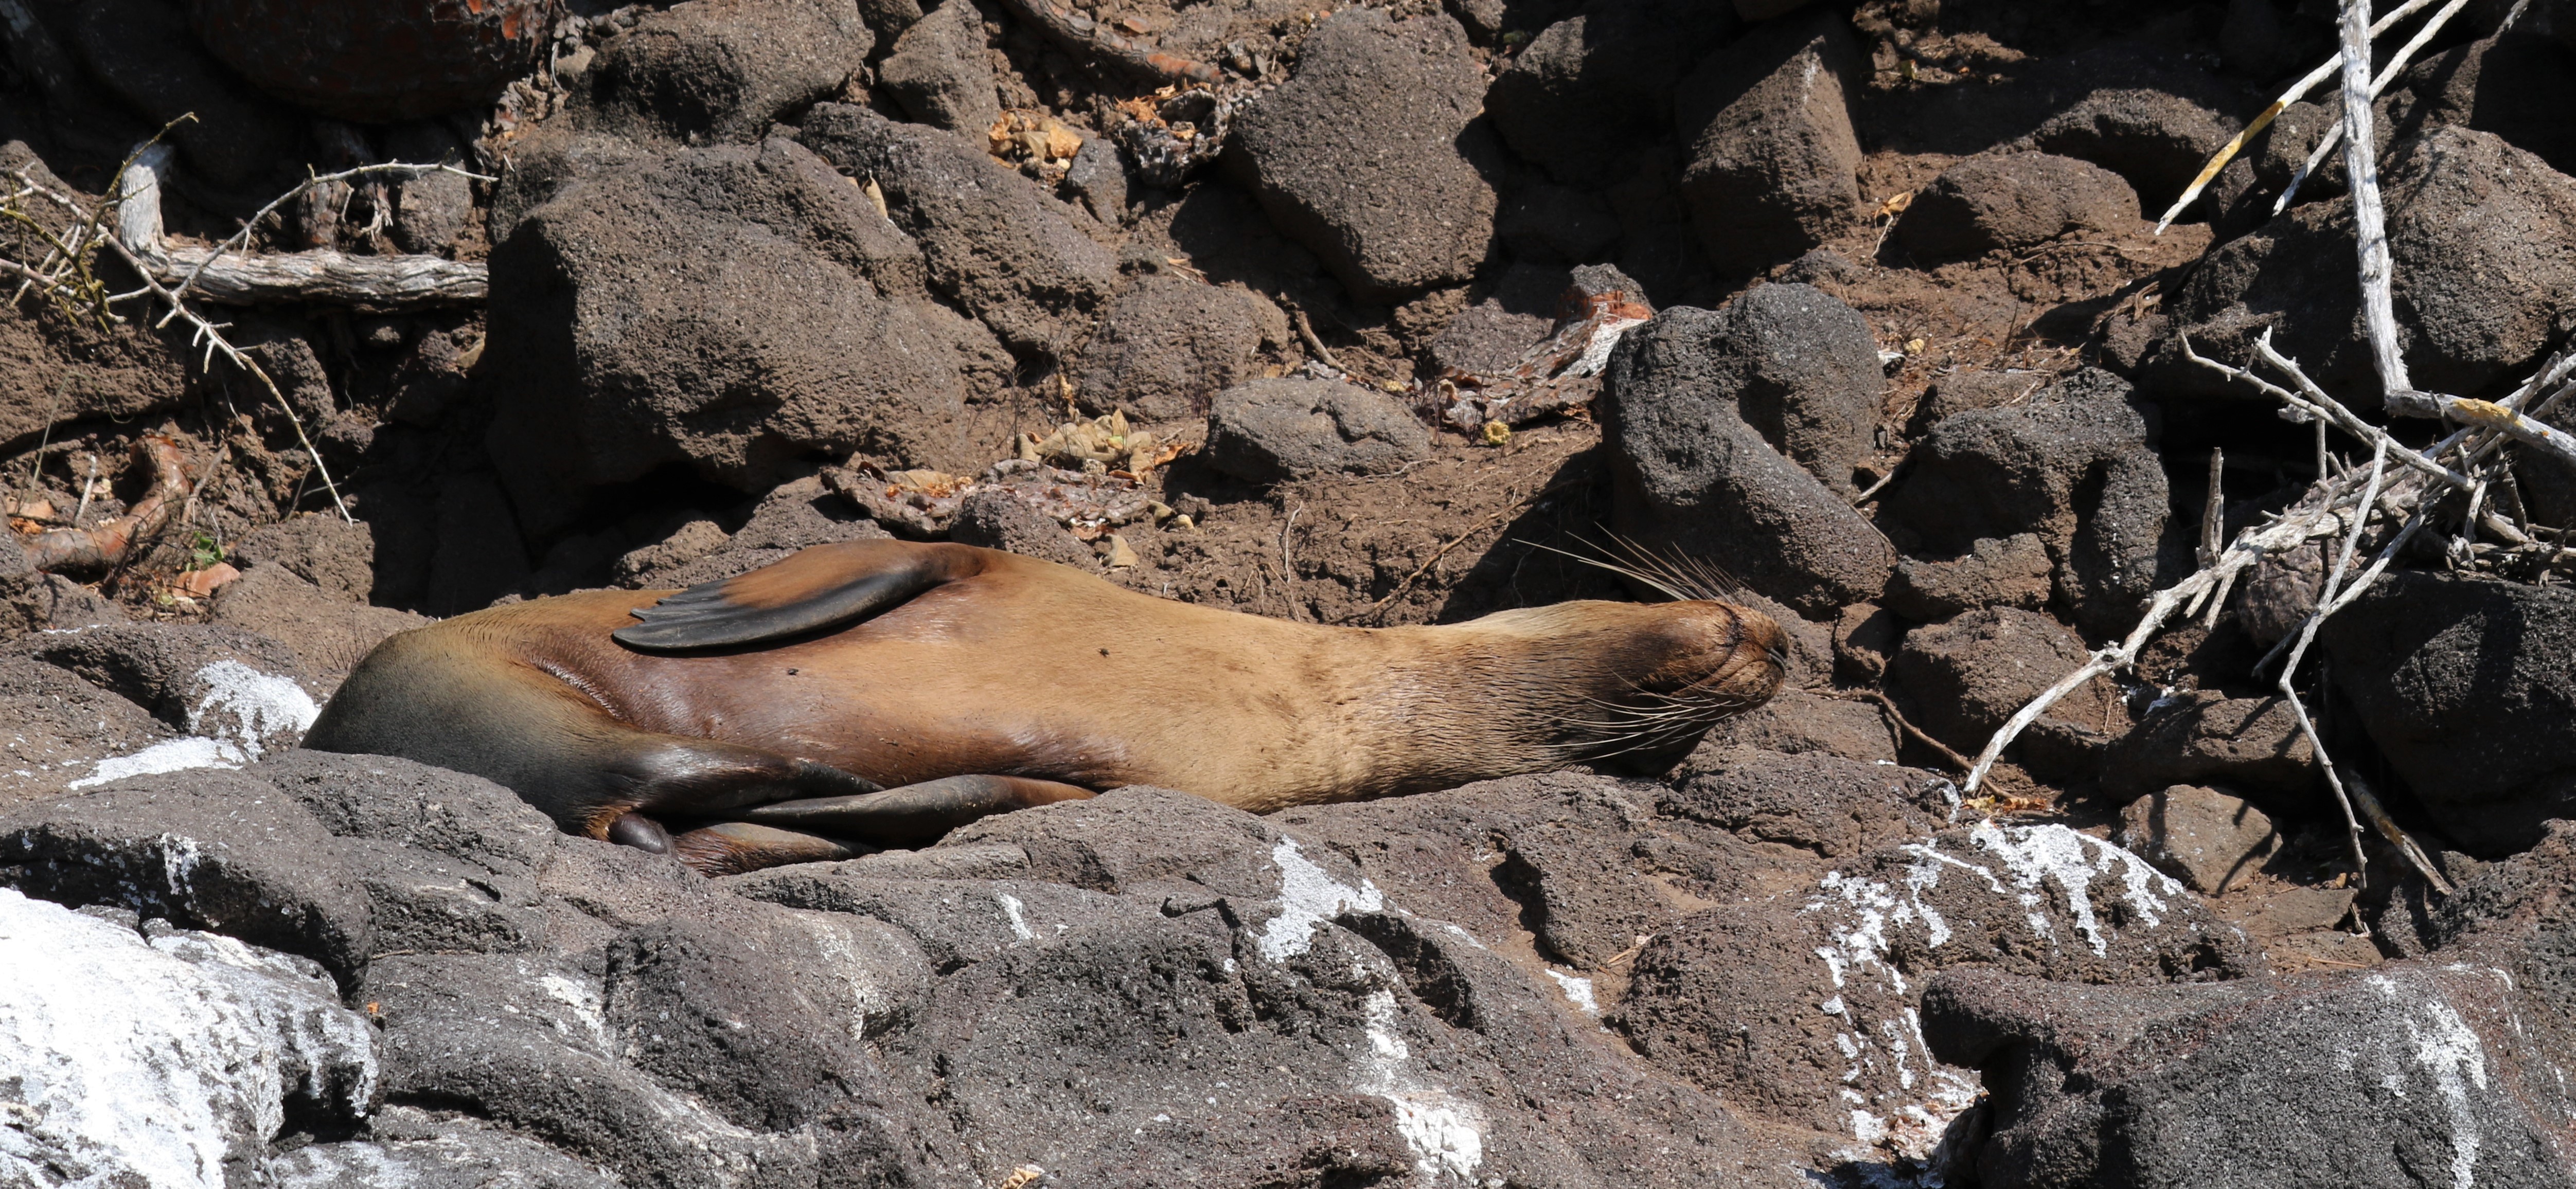 Galapagos sea lion sleeping on rocks